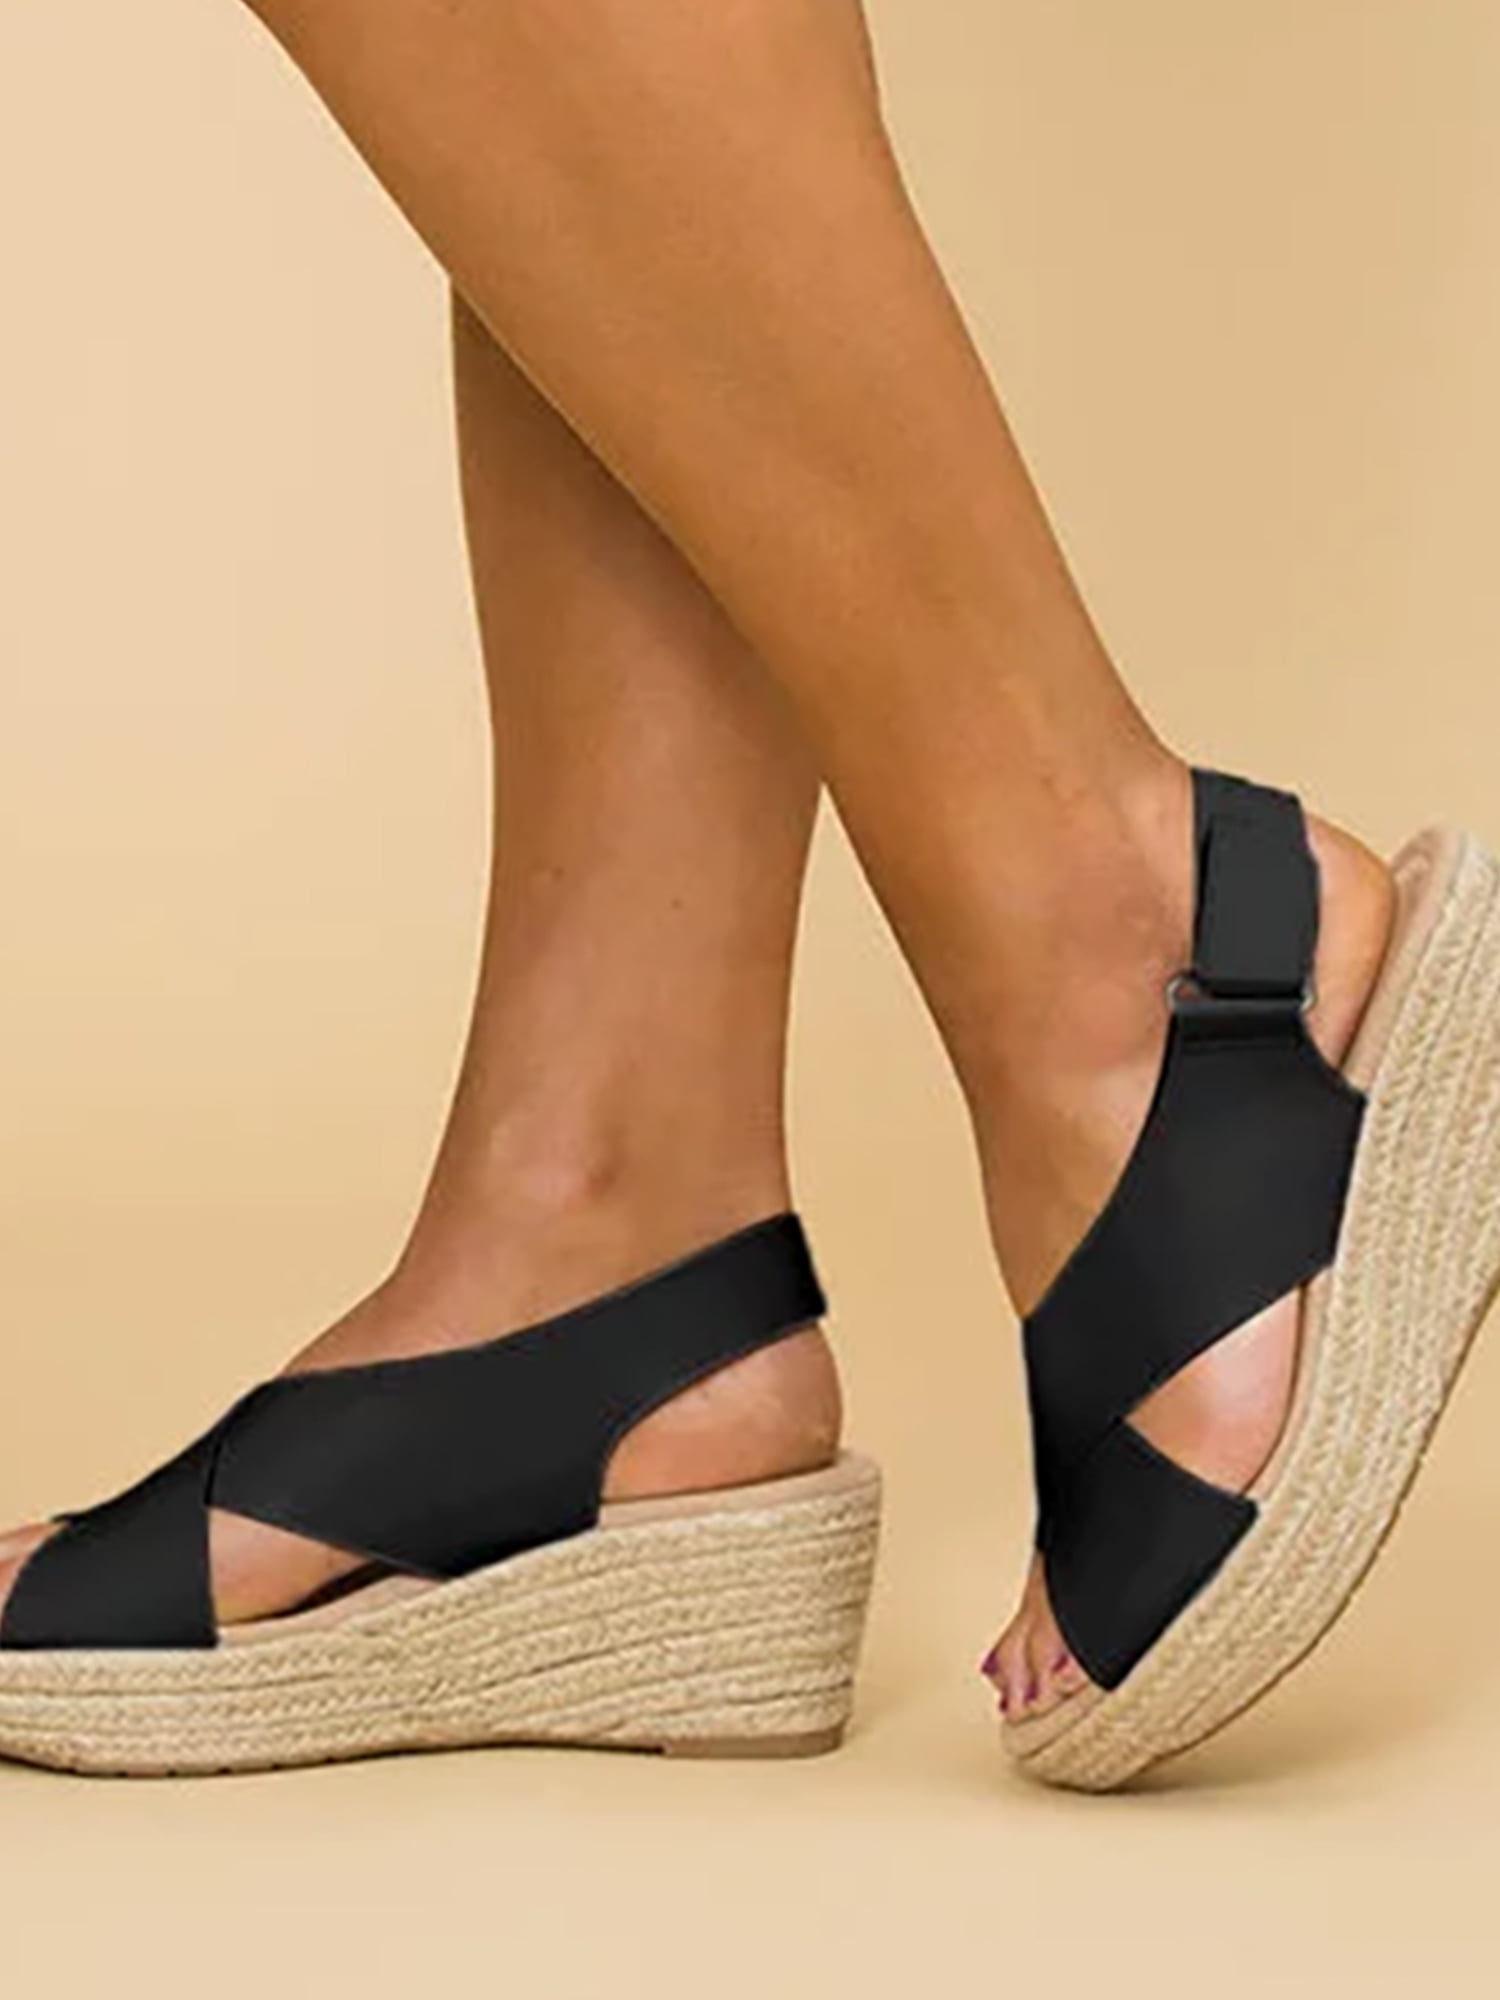 Coutgo Womens Espadrille Platform Wedge Sandals Ankle Straps Buckle Slingback Summer Closed Cap Toe Shoes 